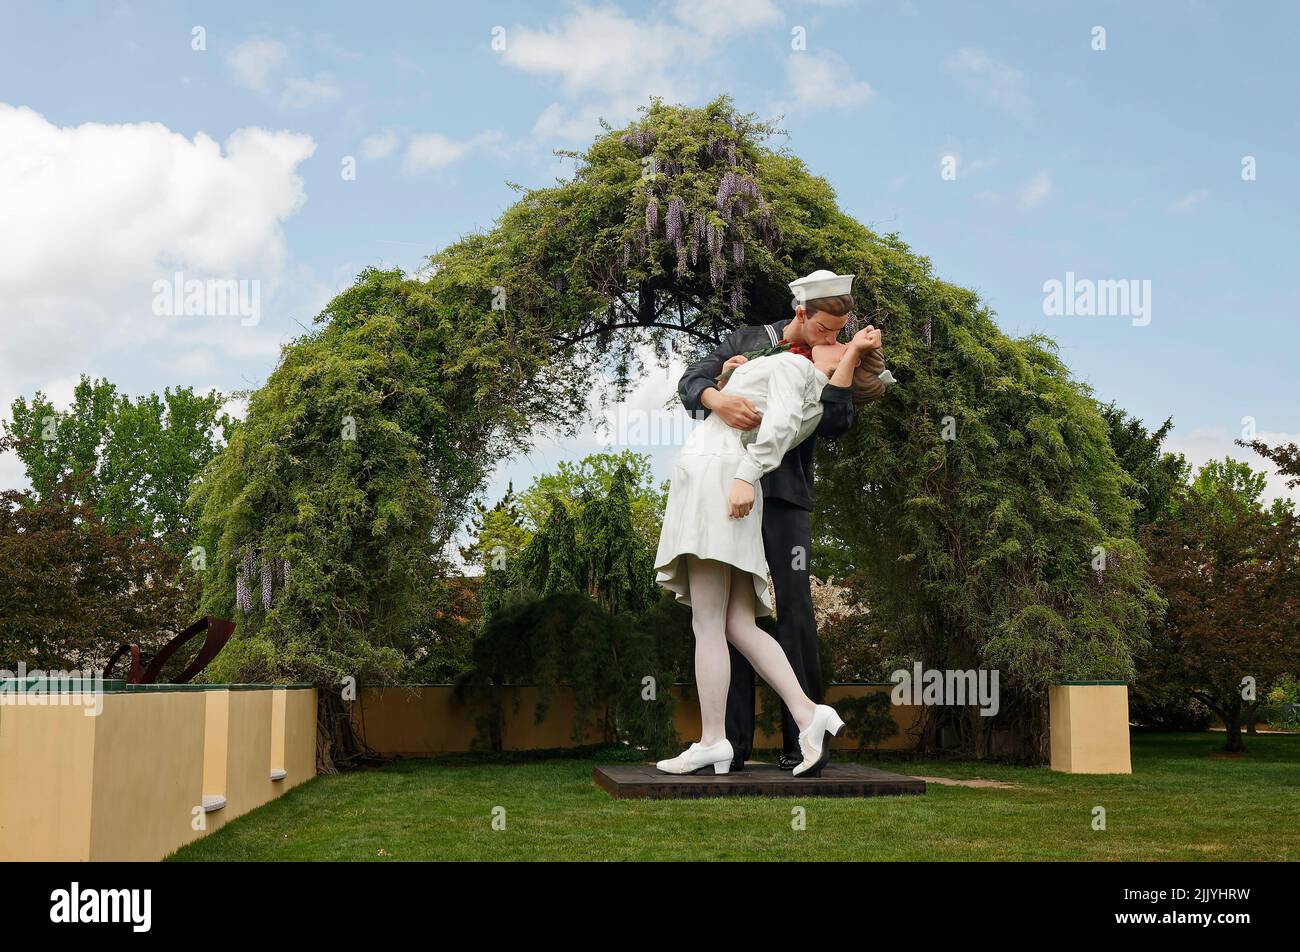 Unconditional Surrender, huge sculpture, sailor kissing nurse, wisteria, trees, grass, outdoors, Grounds for Sculpture; Seward Johnson Center for the Stock Photo